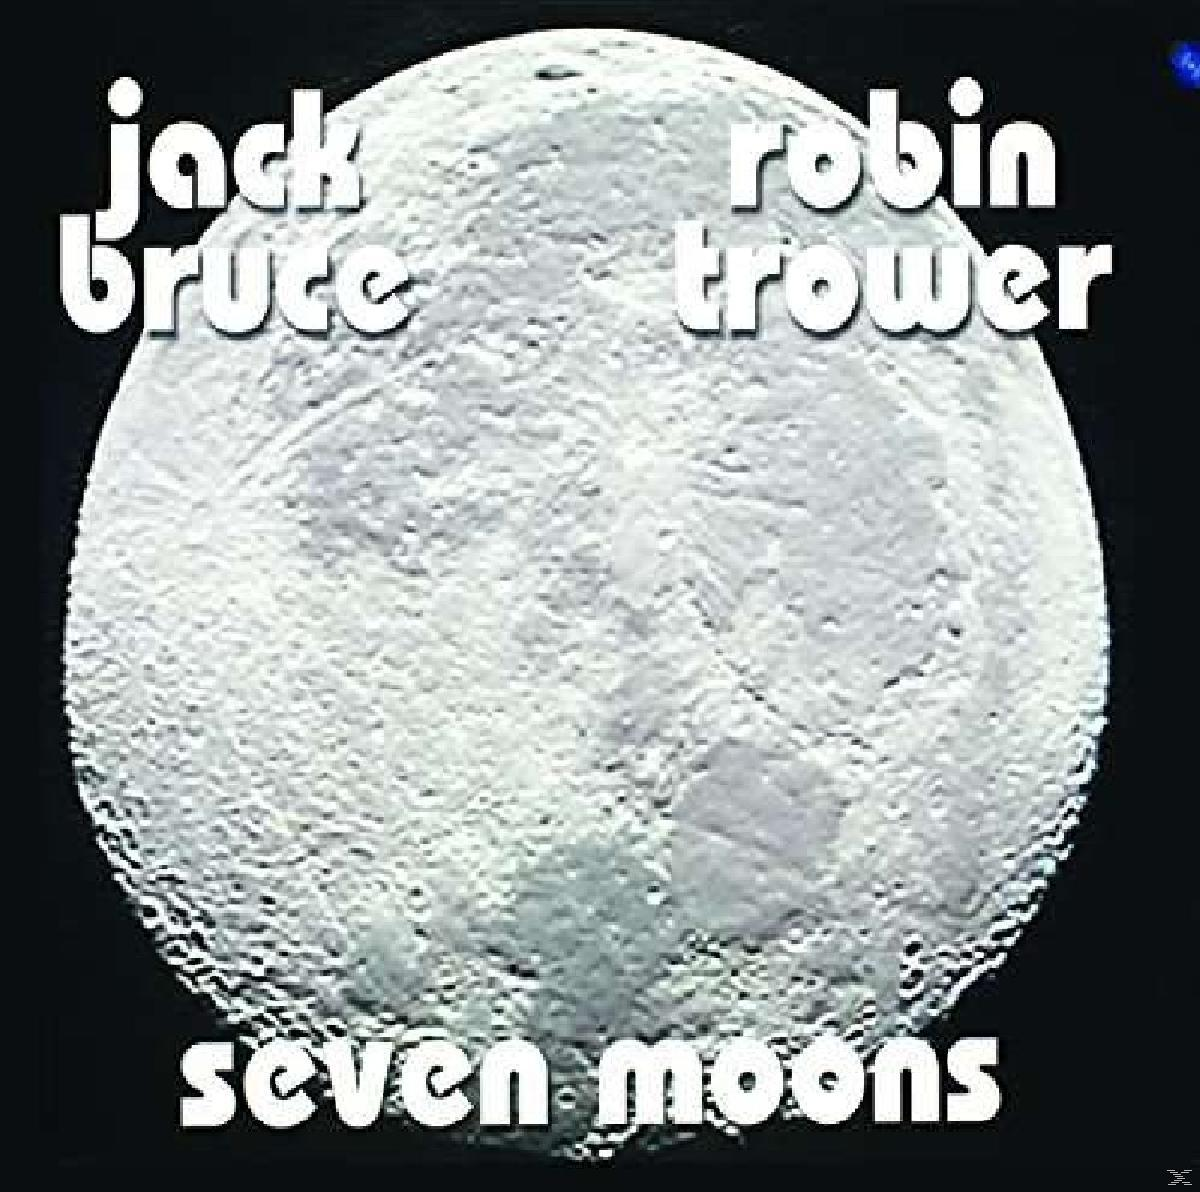 Jack Bruce, Robin Trower (Vinyl) Moons Seven - 